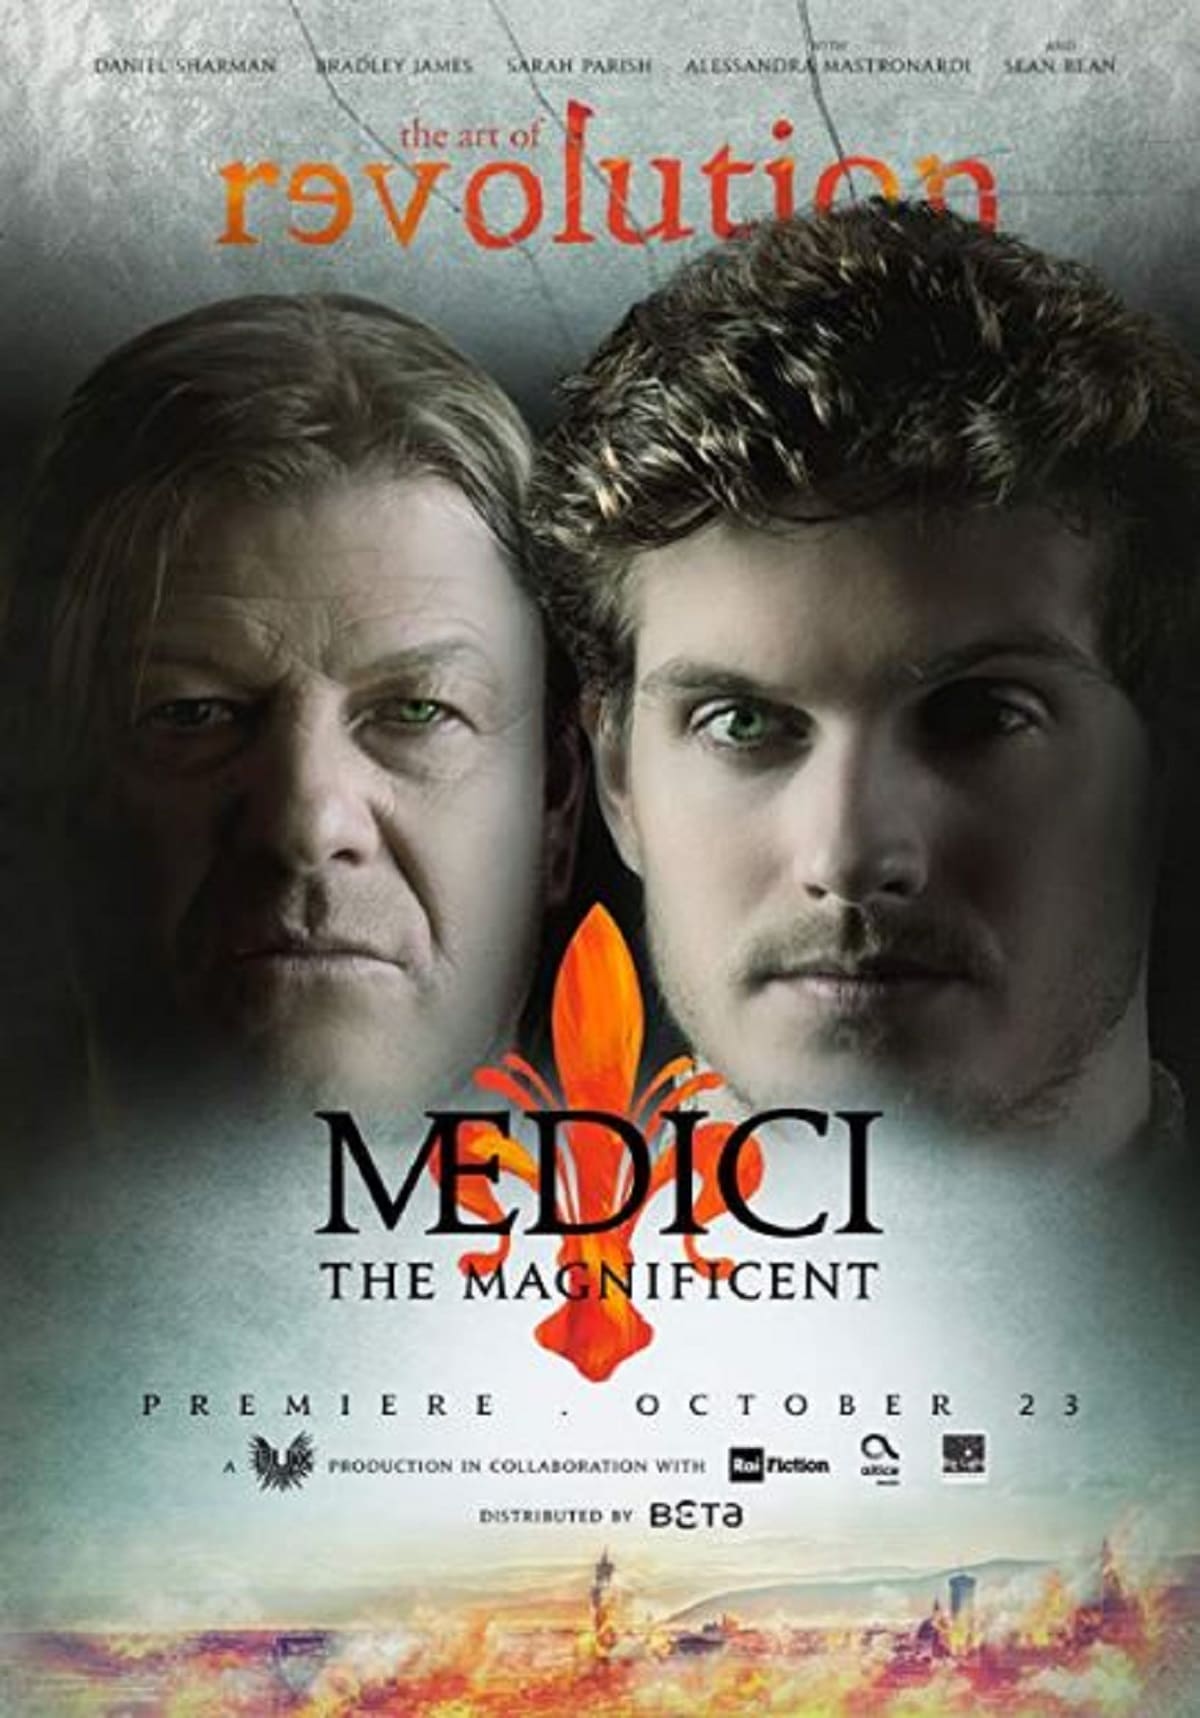 Medici Netflix Season 2 Cast Netflixs Medici The Magnificent Trailer Takes Sean Bean